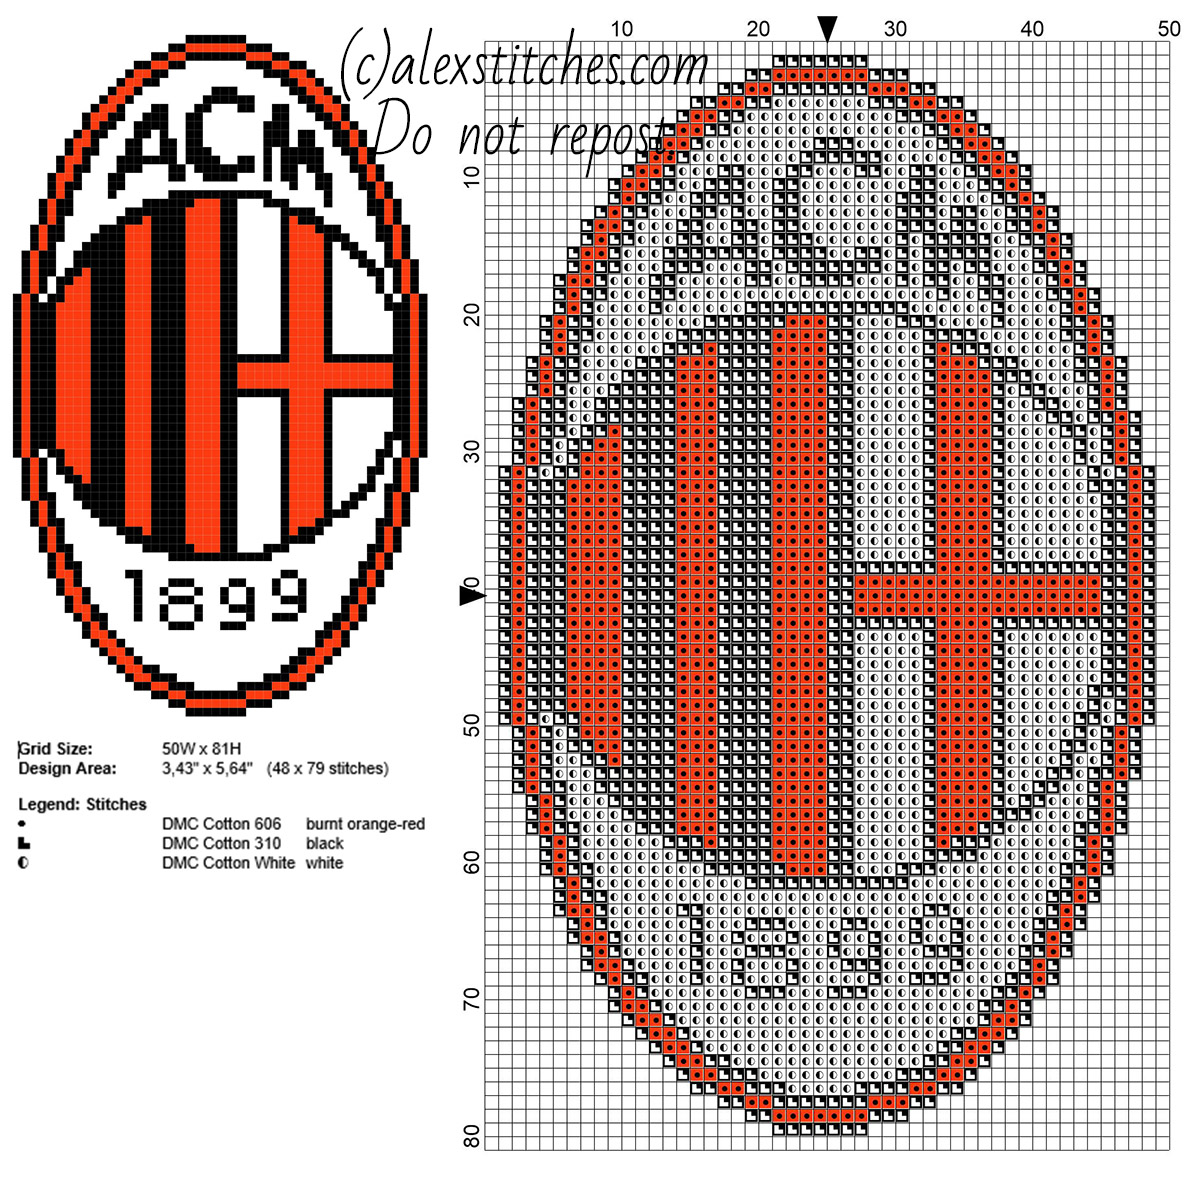 A_C_ Milan soccer team logo badge free cross stitch pattern 48 x 79 stitches 3 DMC threads